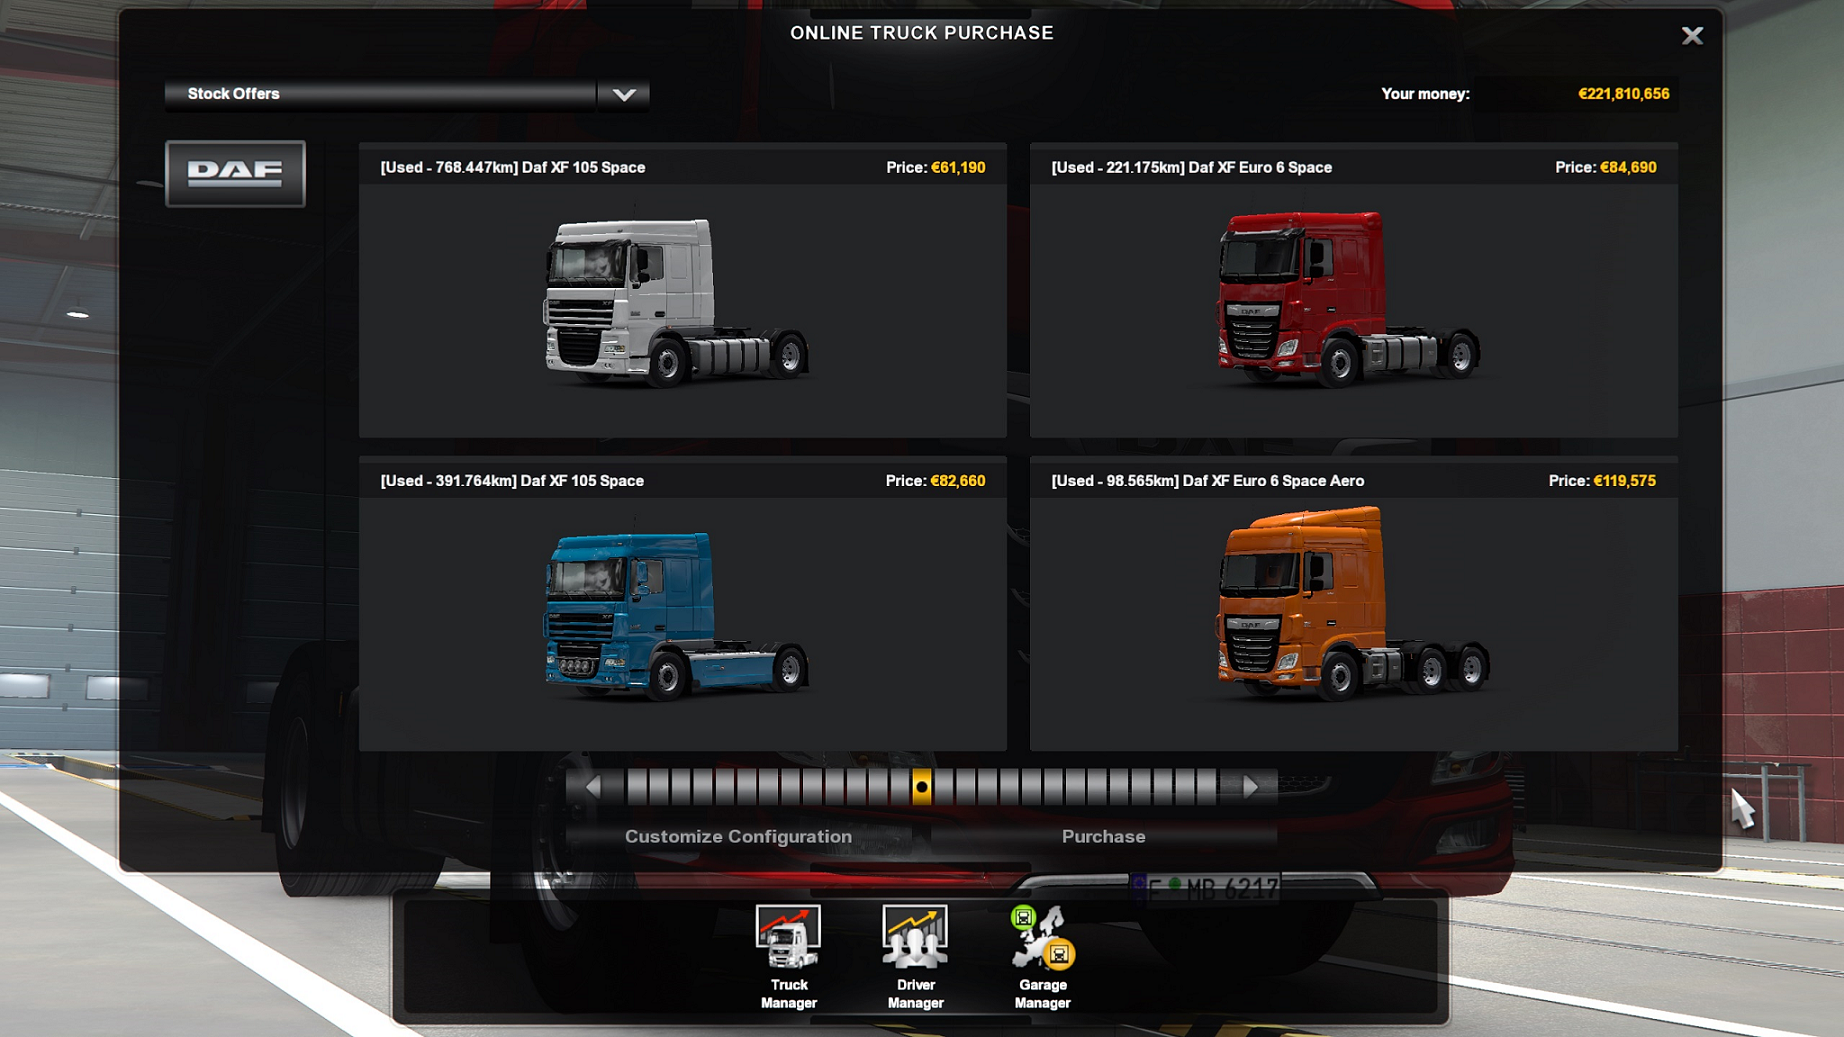 euro truck simulator 2 mods not downloading